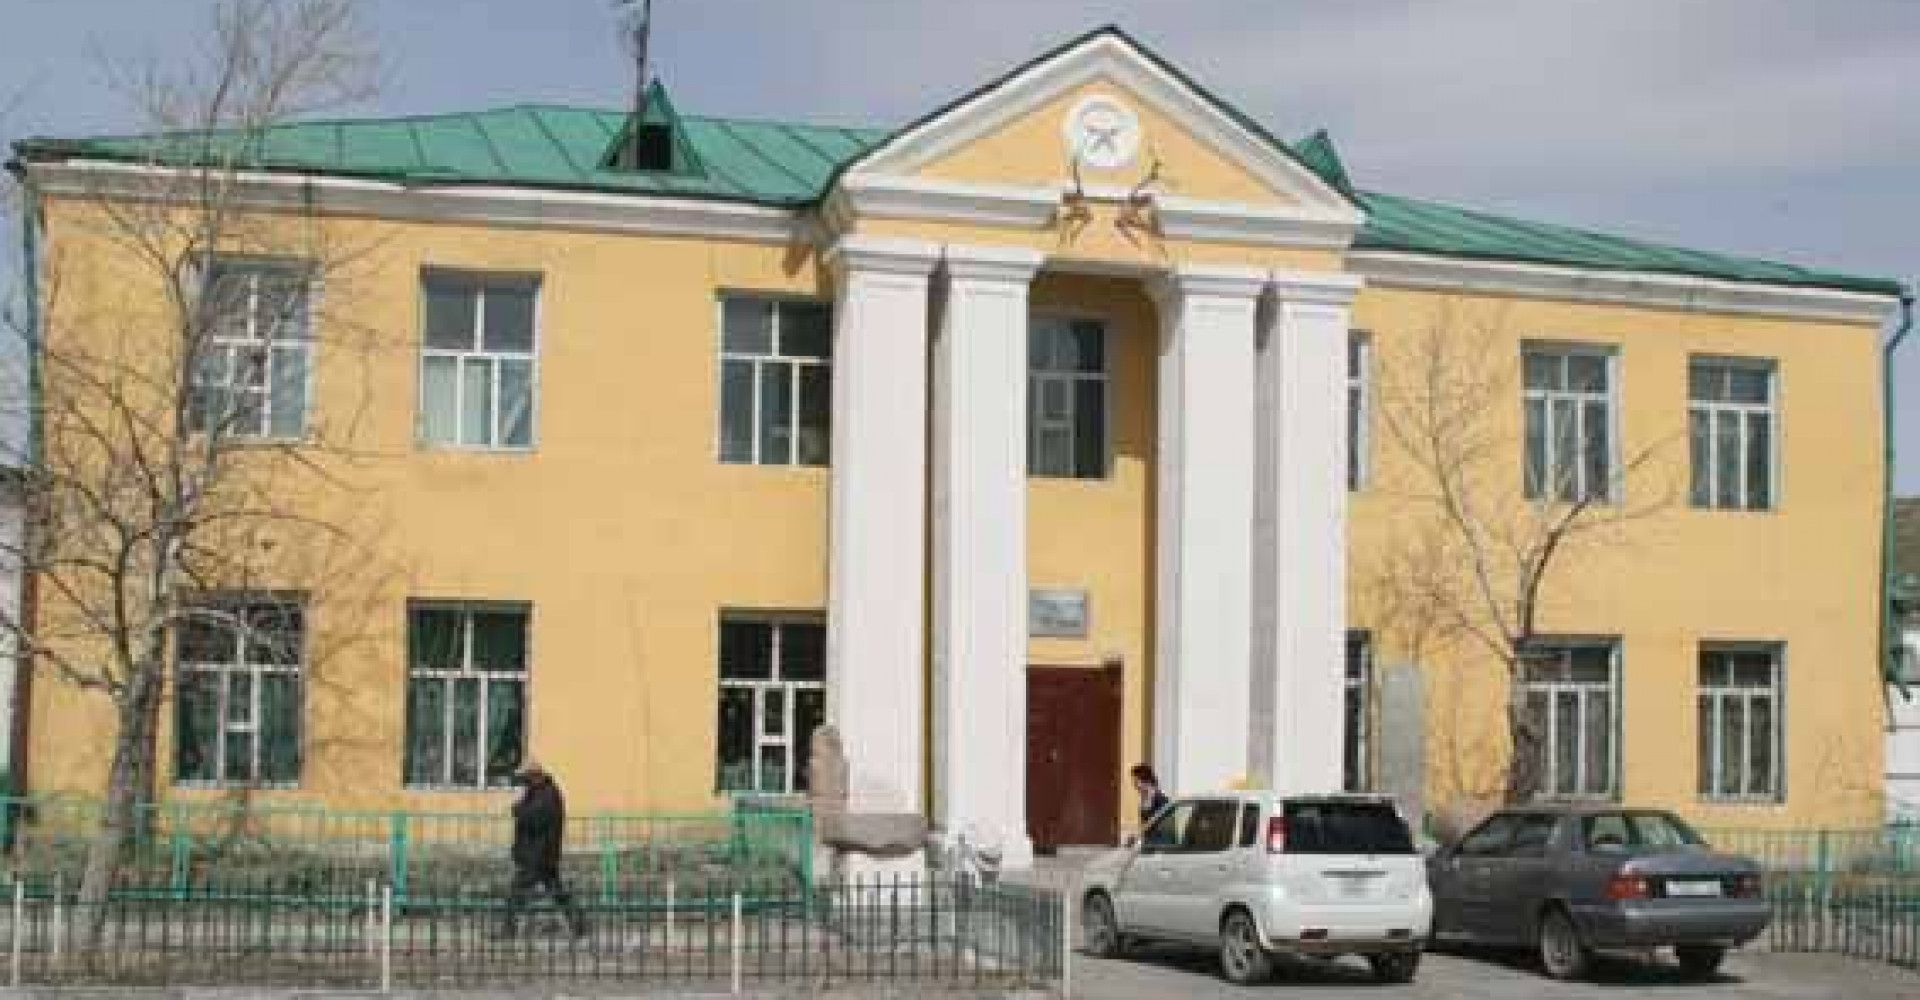 Museum of Govi-Altai province